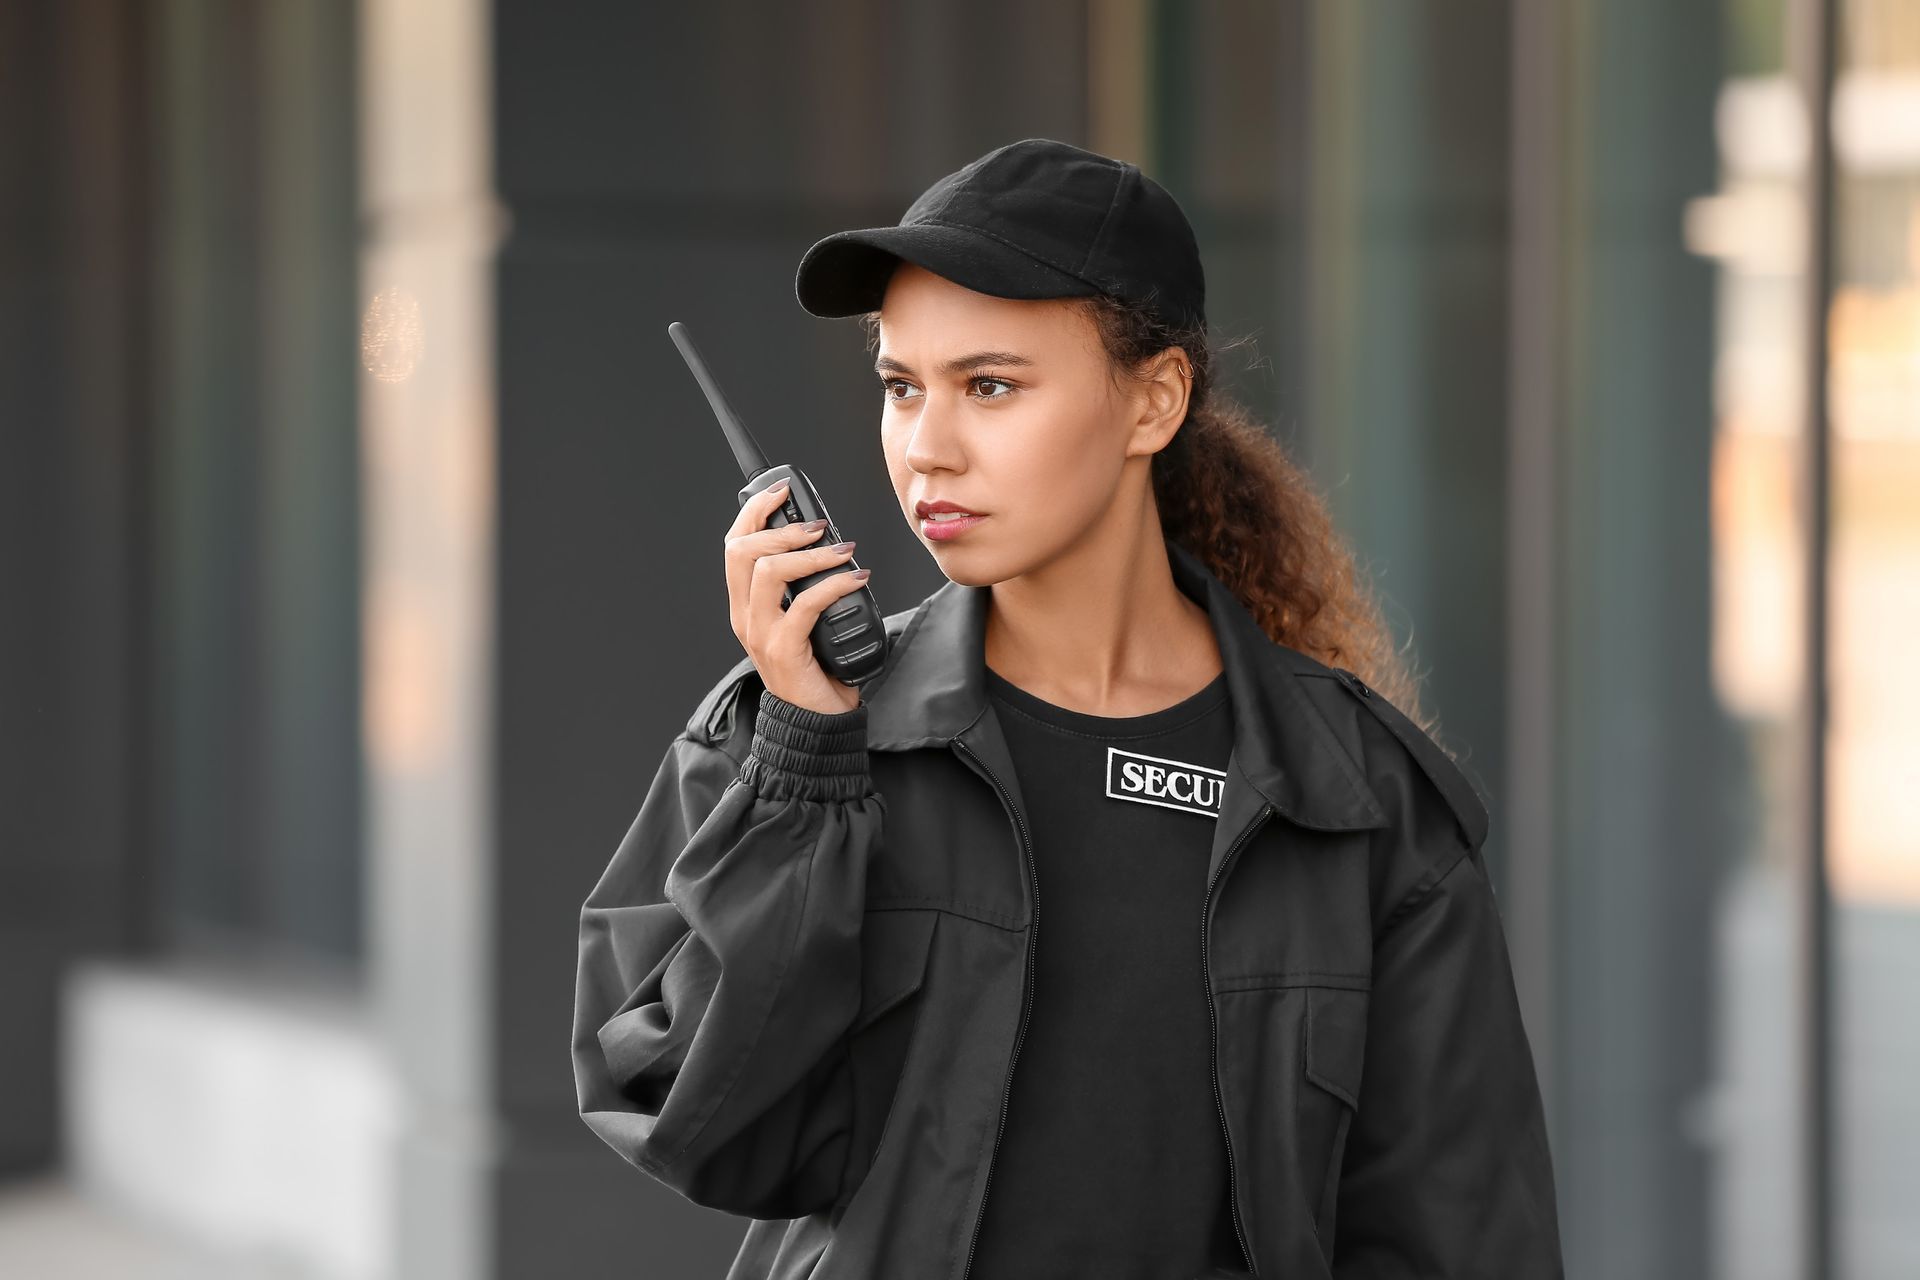 A woman in a black jacket and hat is talking on a walkie talkie.